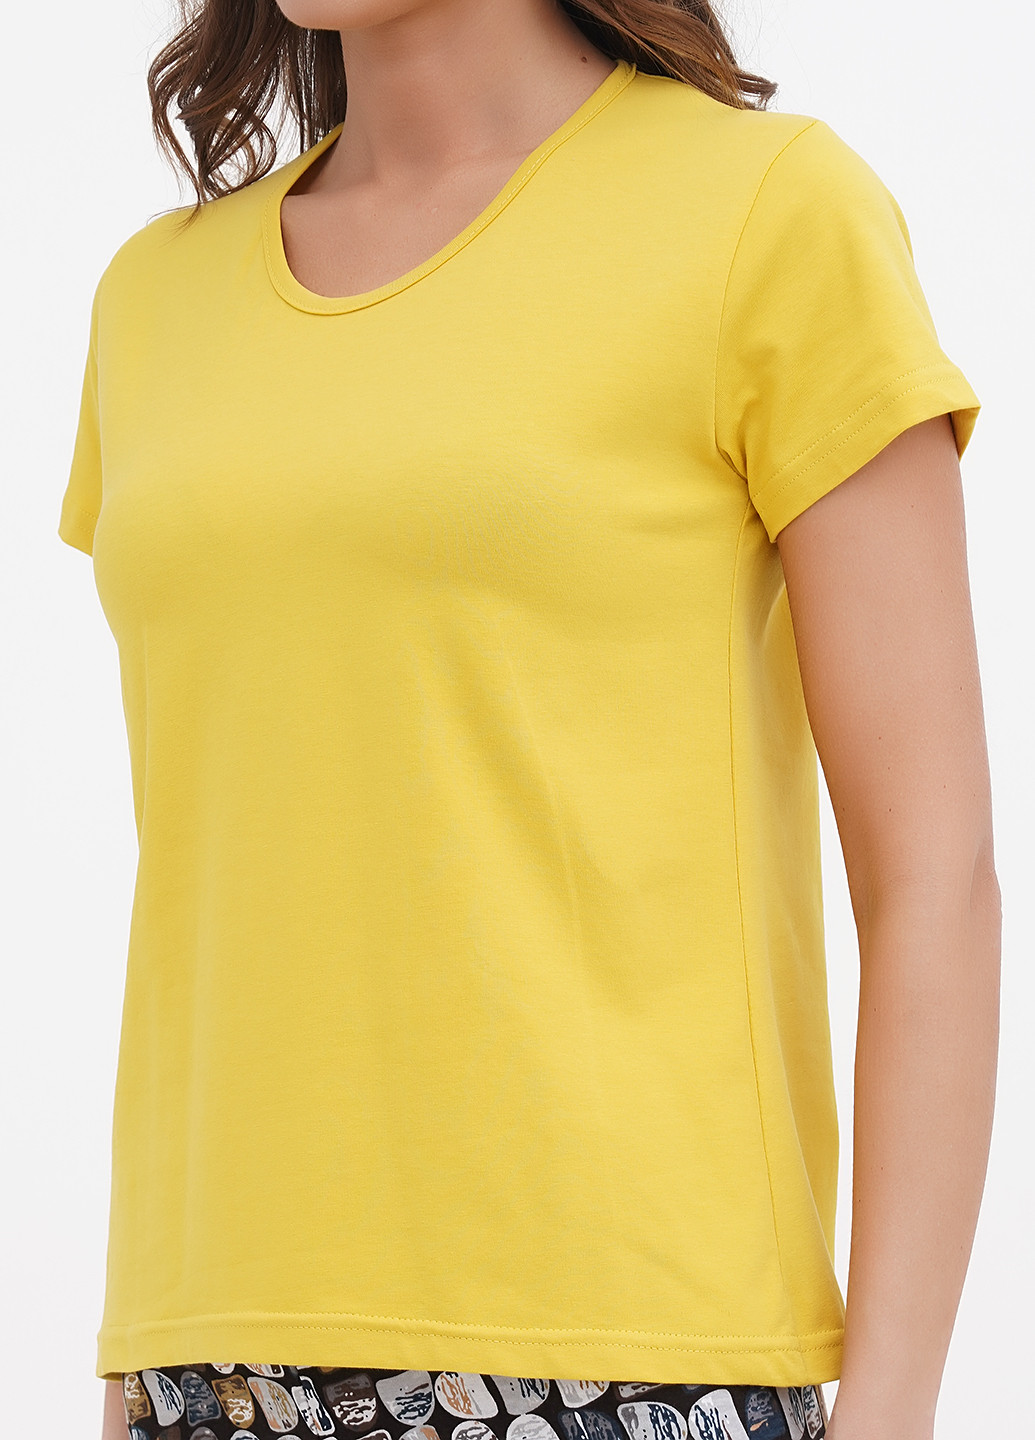 Желтая всесезон пижама (футболка, бриджи, маска) футболка + бриджи Lucci